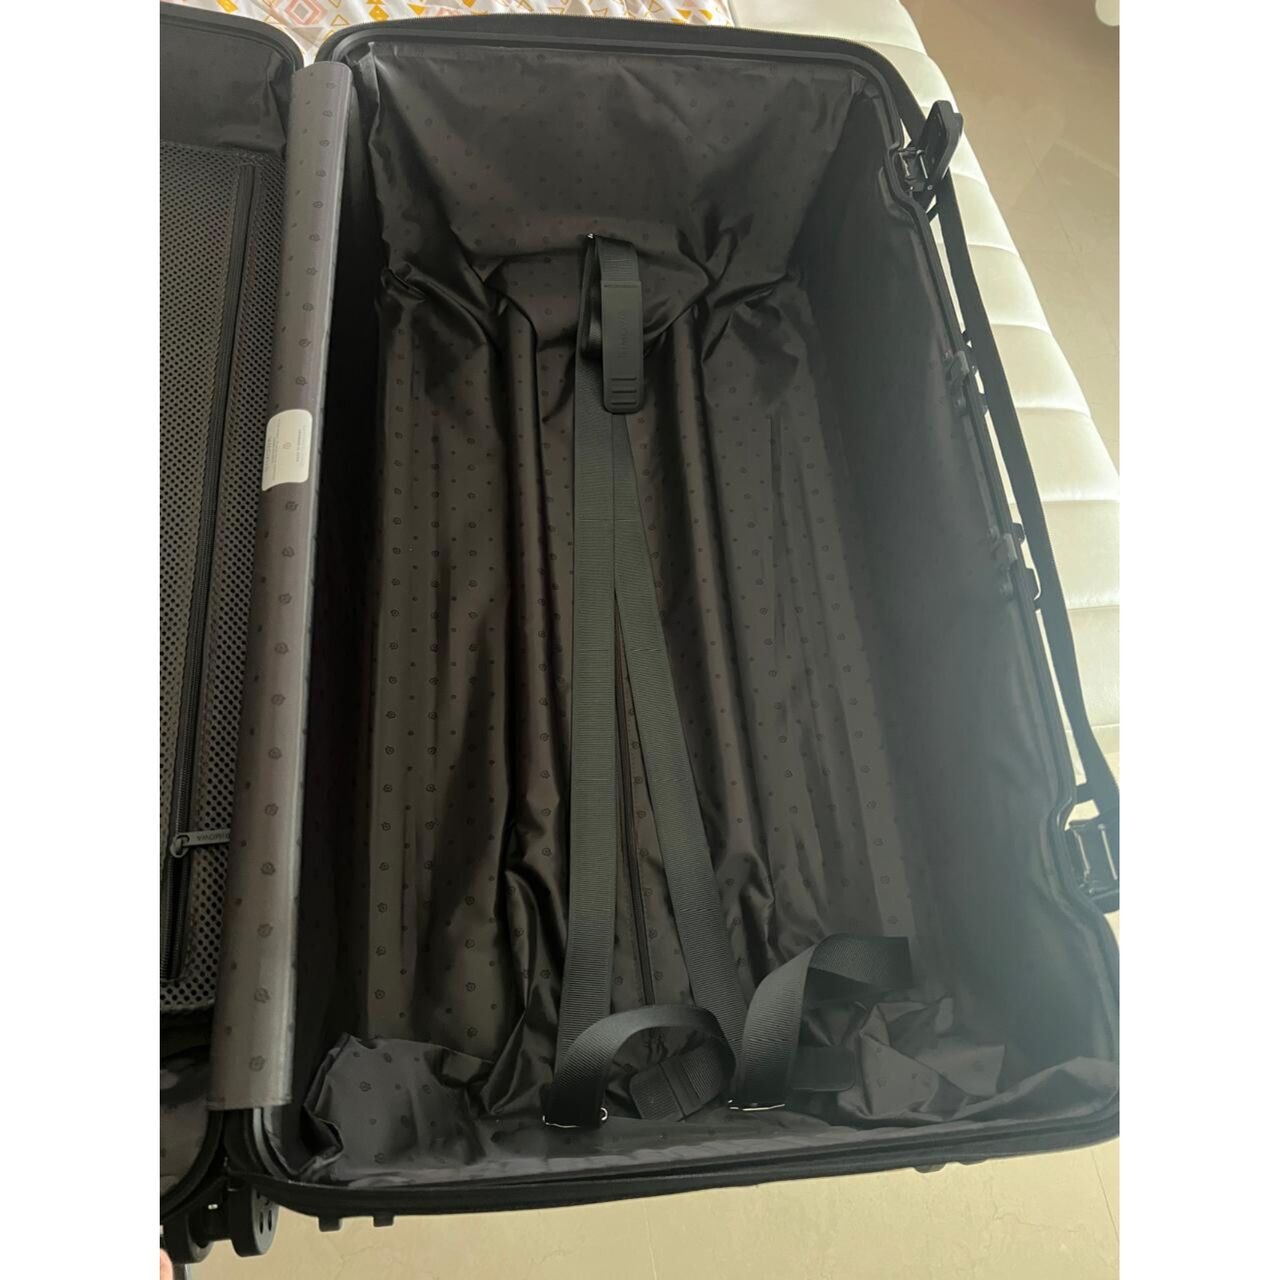 Rimowa Original Trunk Plus Black Luggage and Travel